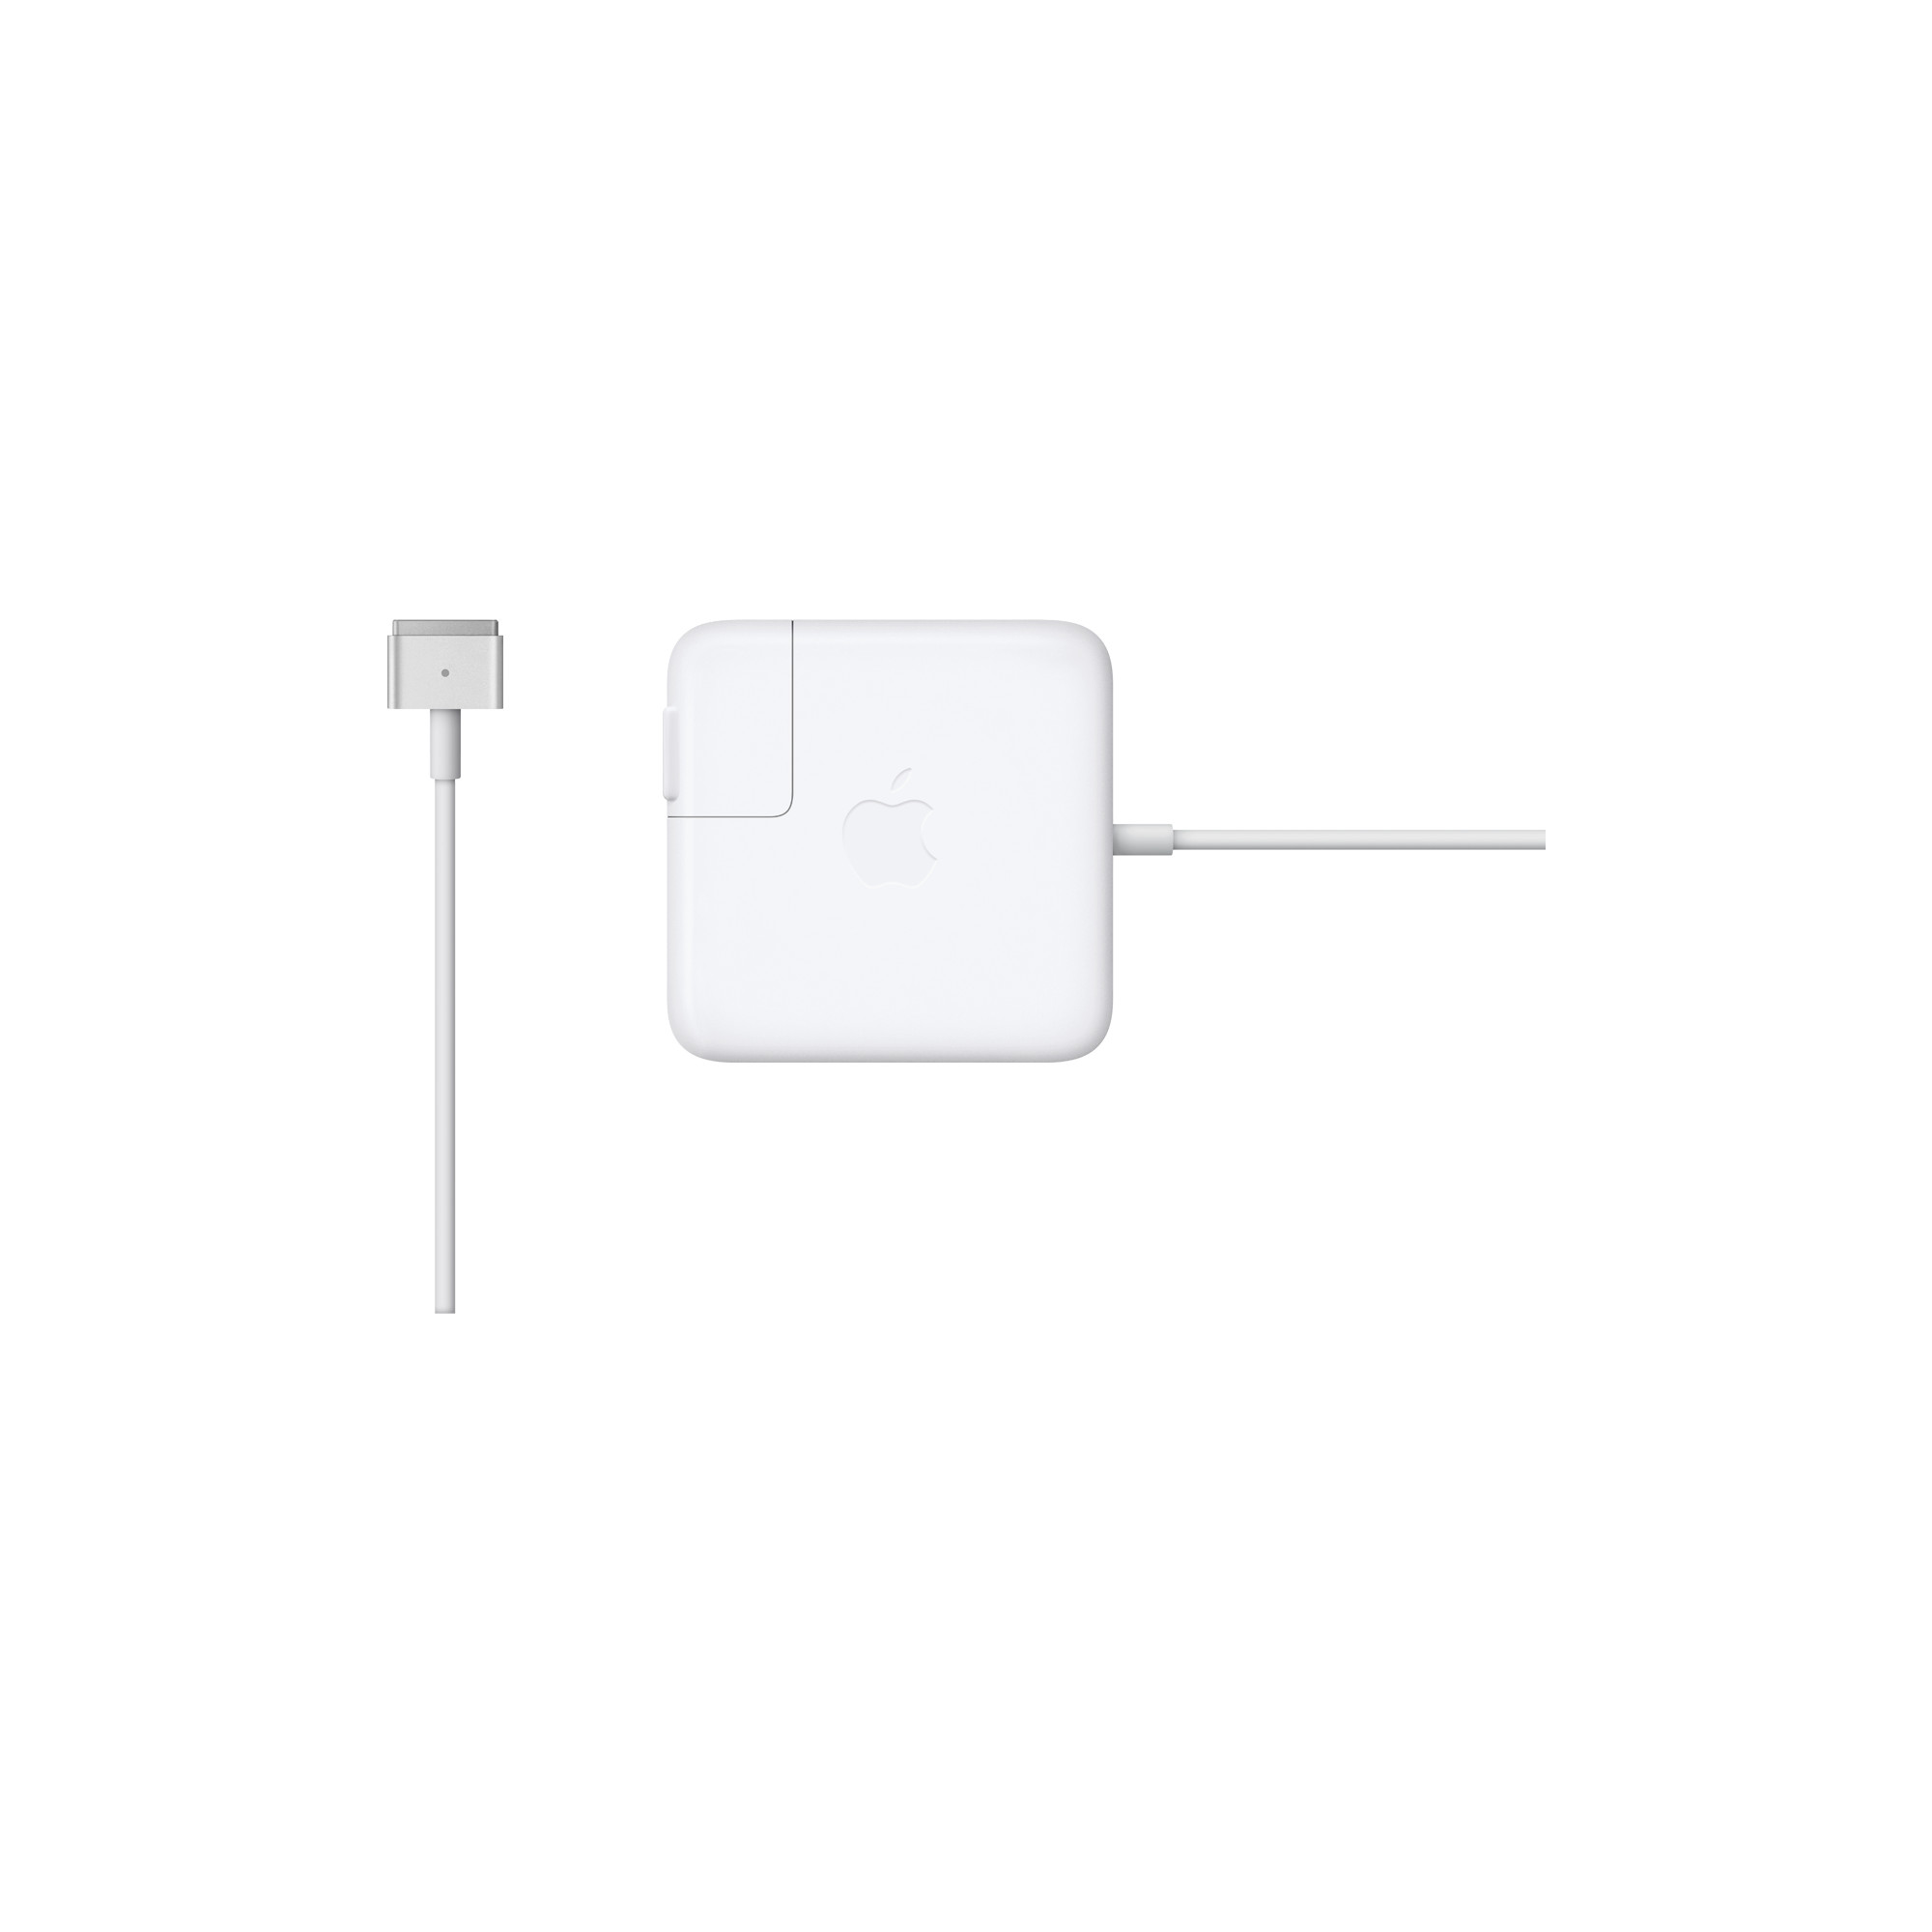 Apple gyári 85W MagSafe 2 hálózati adapter (Retina kijelzős MacBook Pro laptopokhoz) (MD506Z/A)